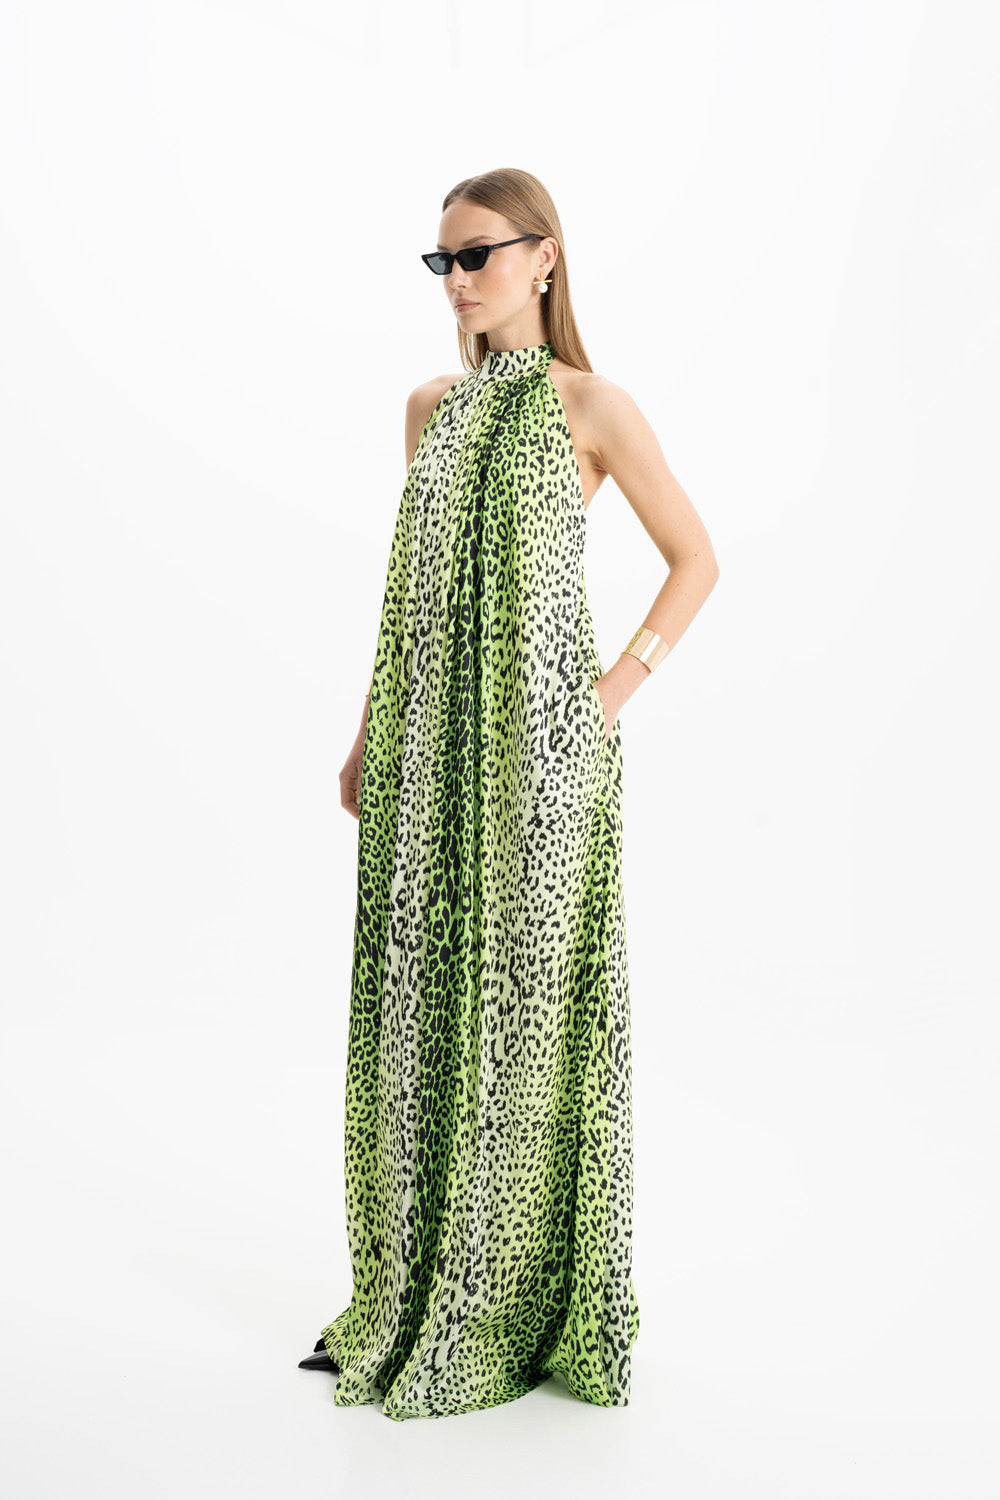 Shop Lora Istanbul Pam Satin Green Leopard Halter Maxi Dress